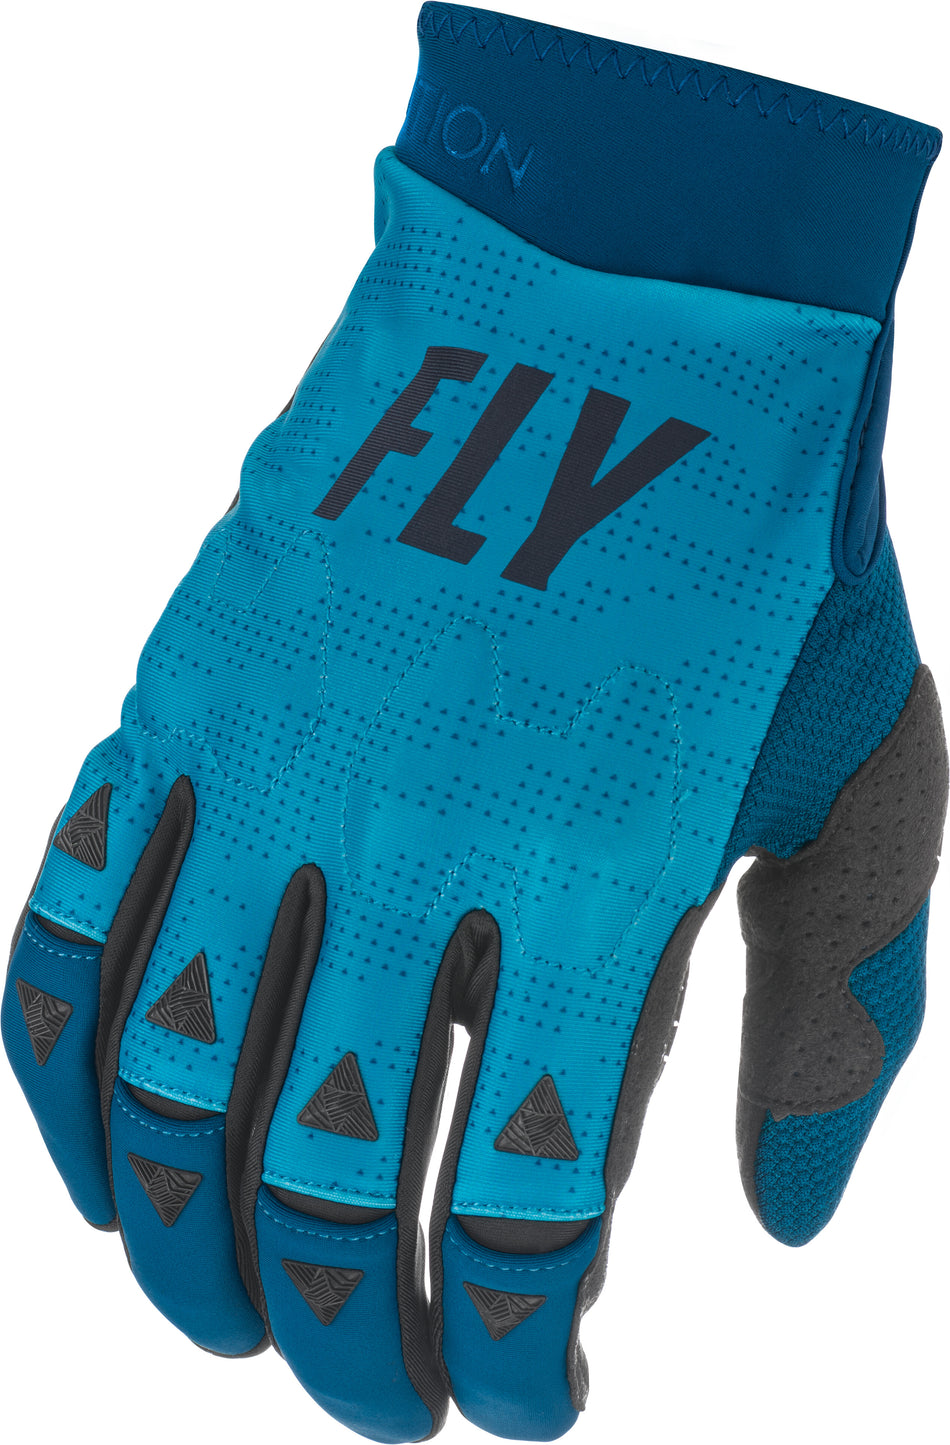 FLY RACING Evolution Dst Gloves Blue/Navy Sz 13 374-11113